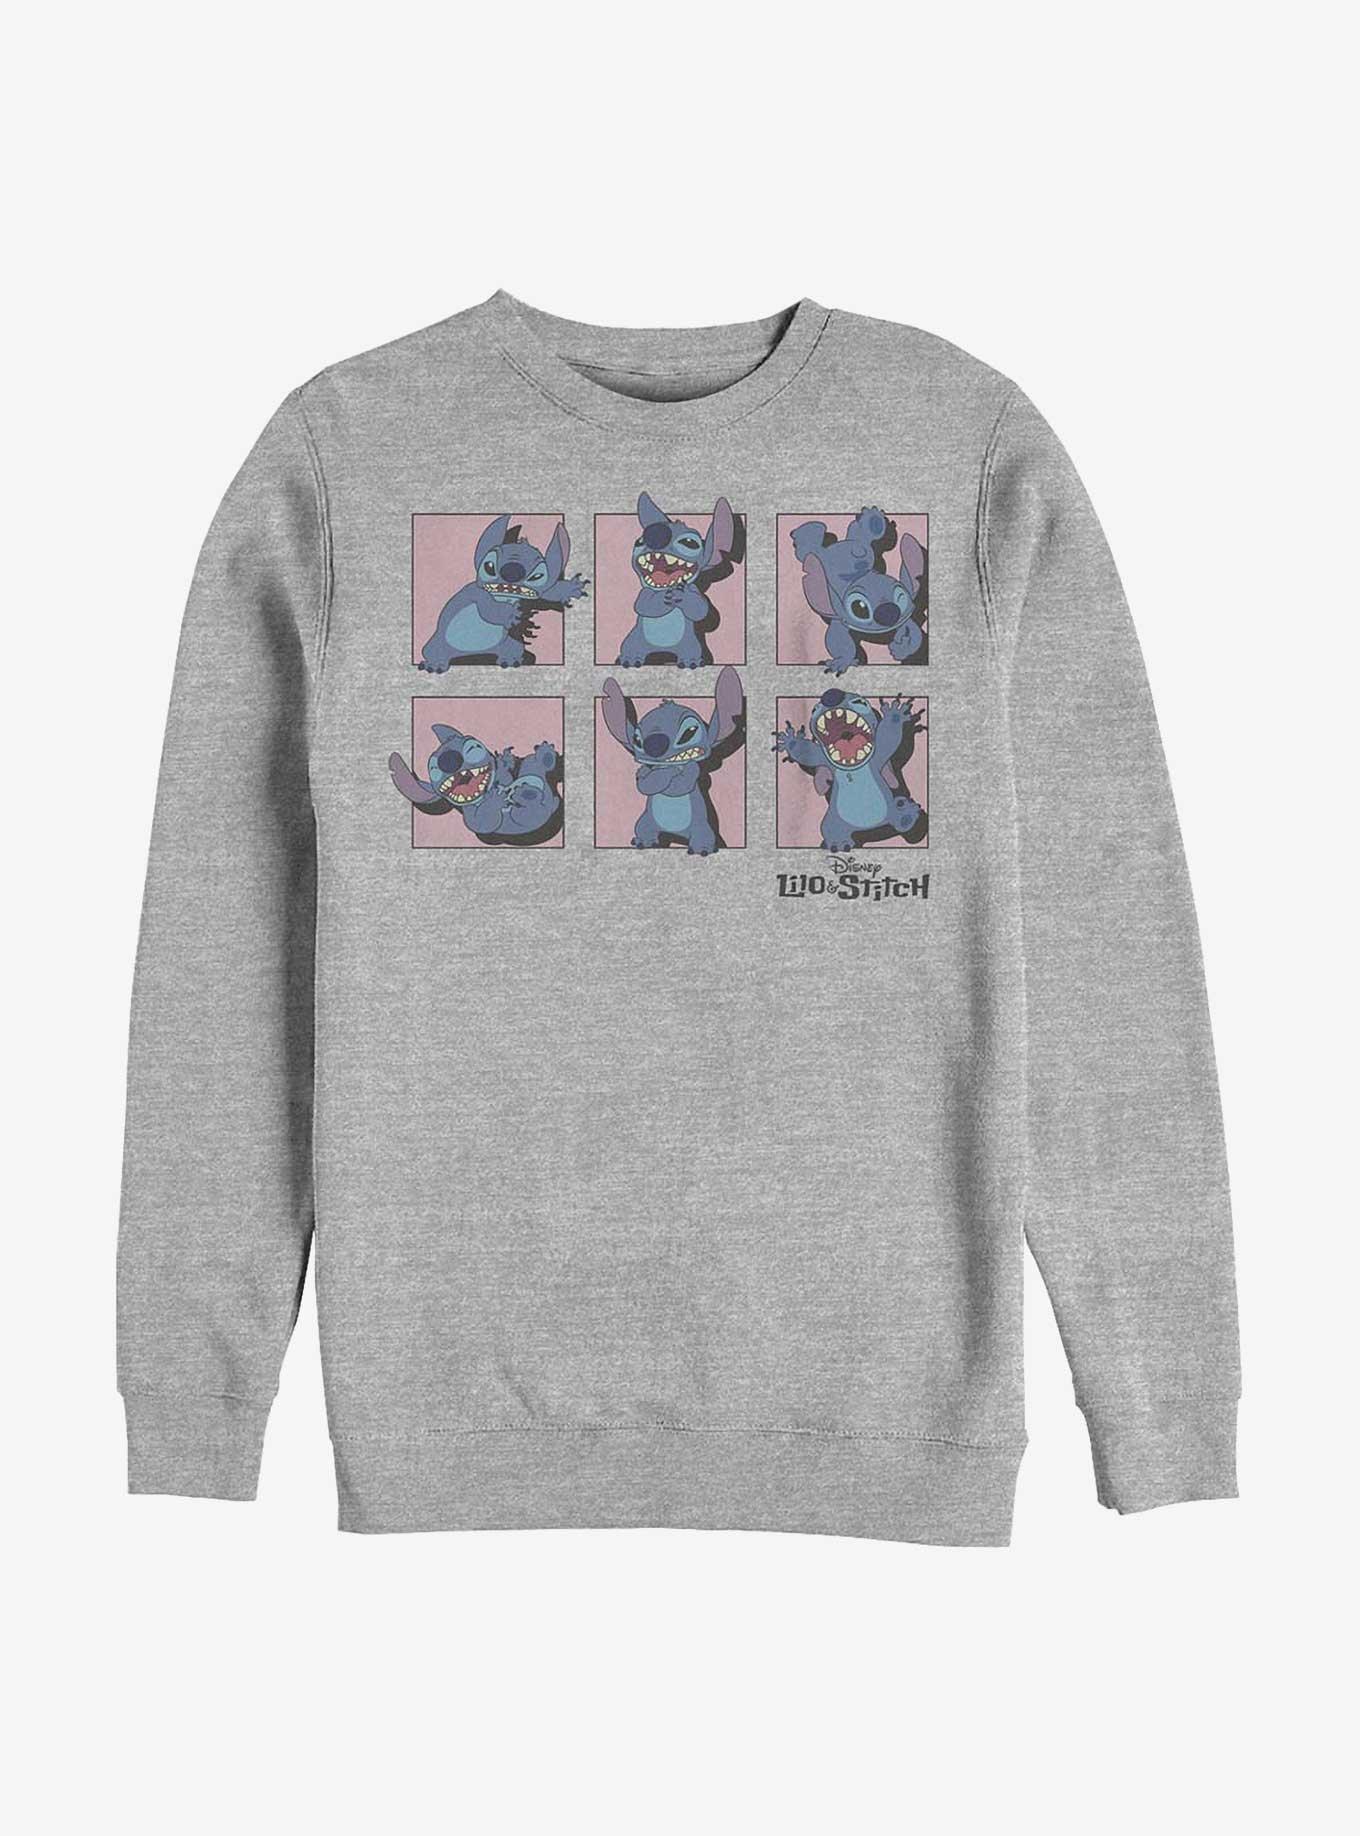 Hot Topic Disney Lilo & Stitch Poses Framed Crew Sweatshirt